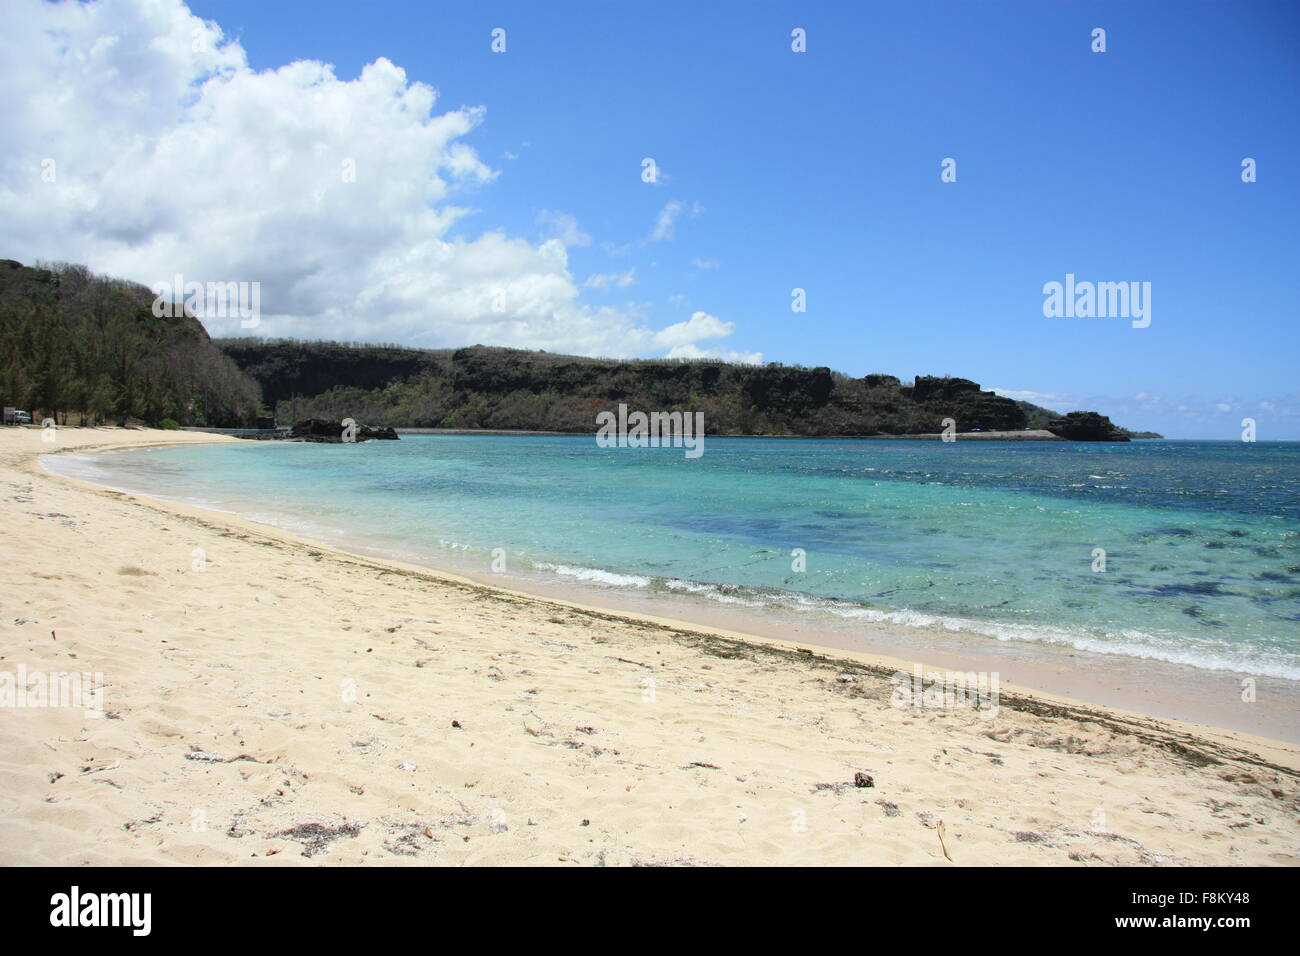 Wild beach. Africa, Mauritius, Indian Ocean Stock Photo